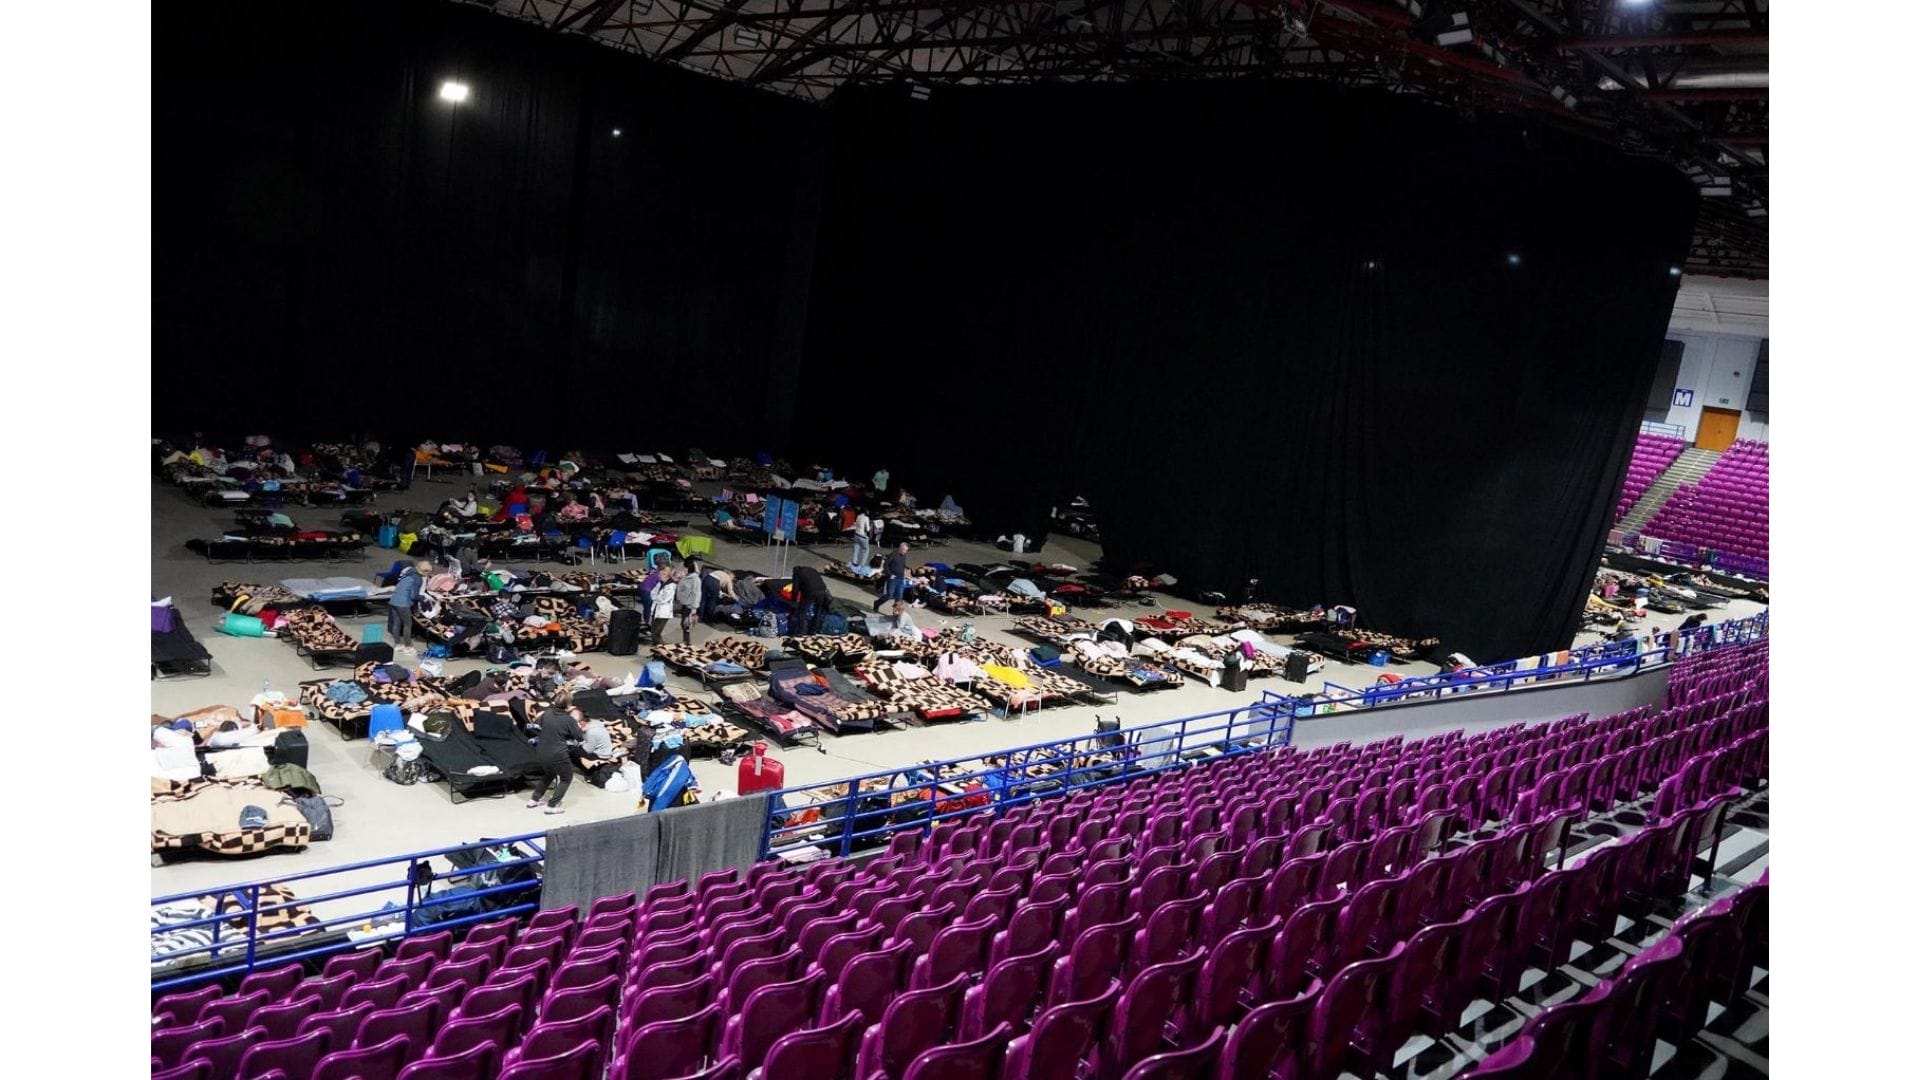 People sleeping on the floor in an arena.